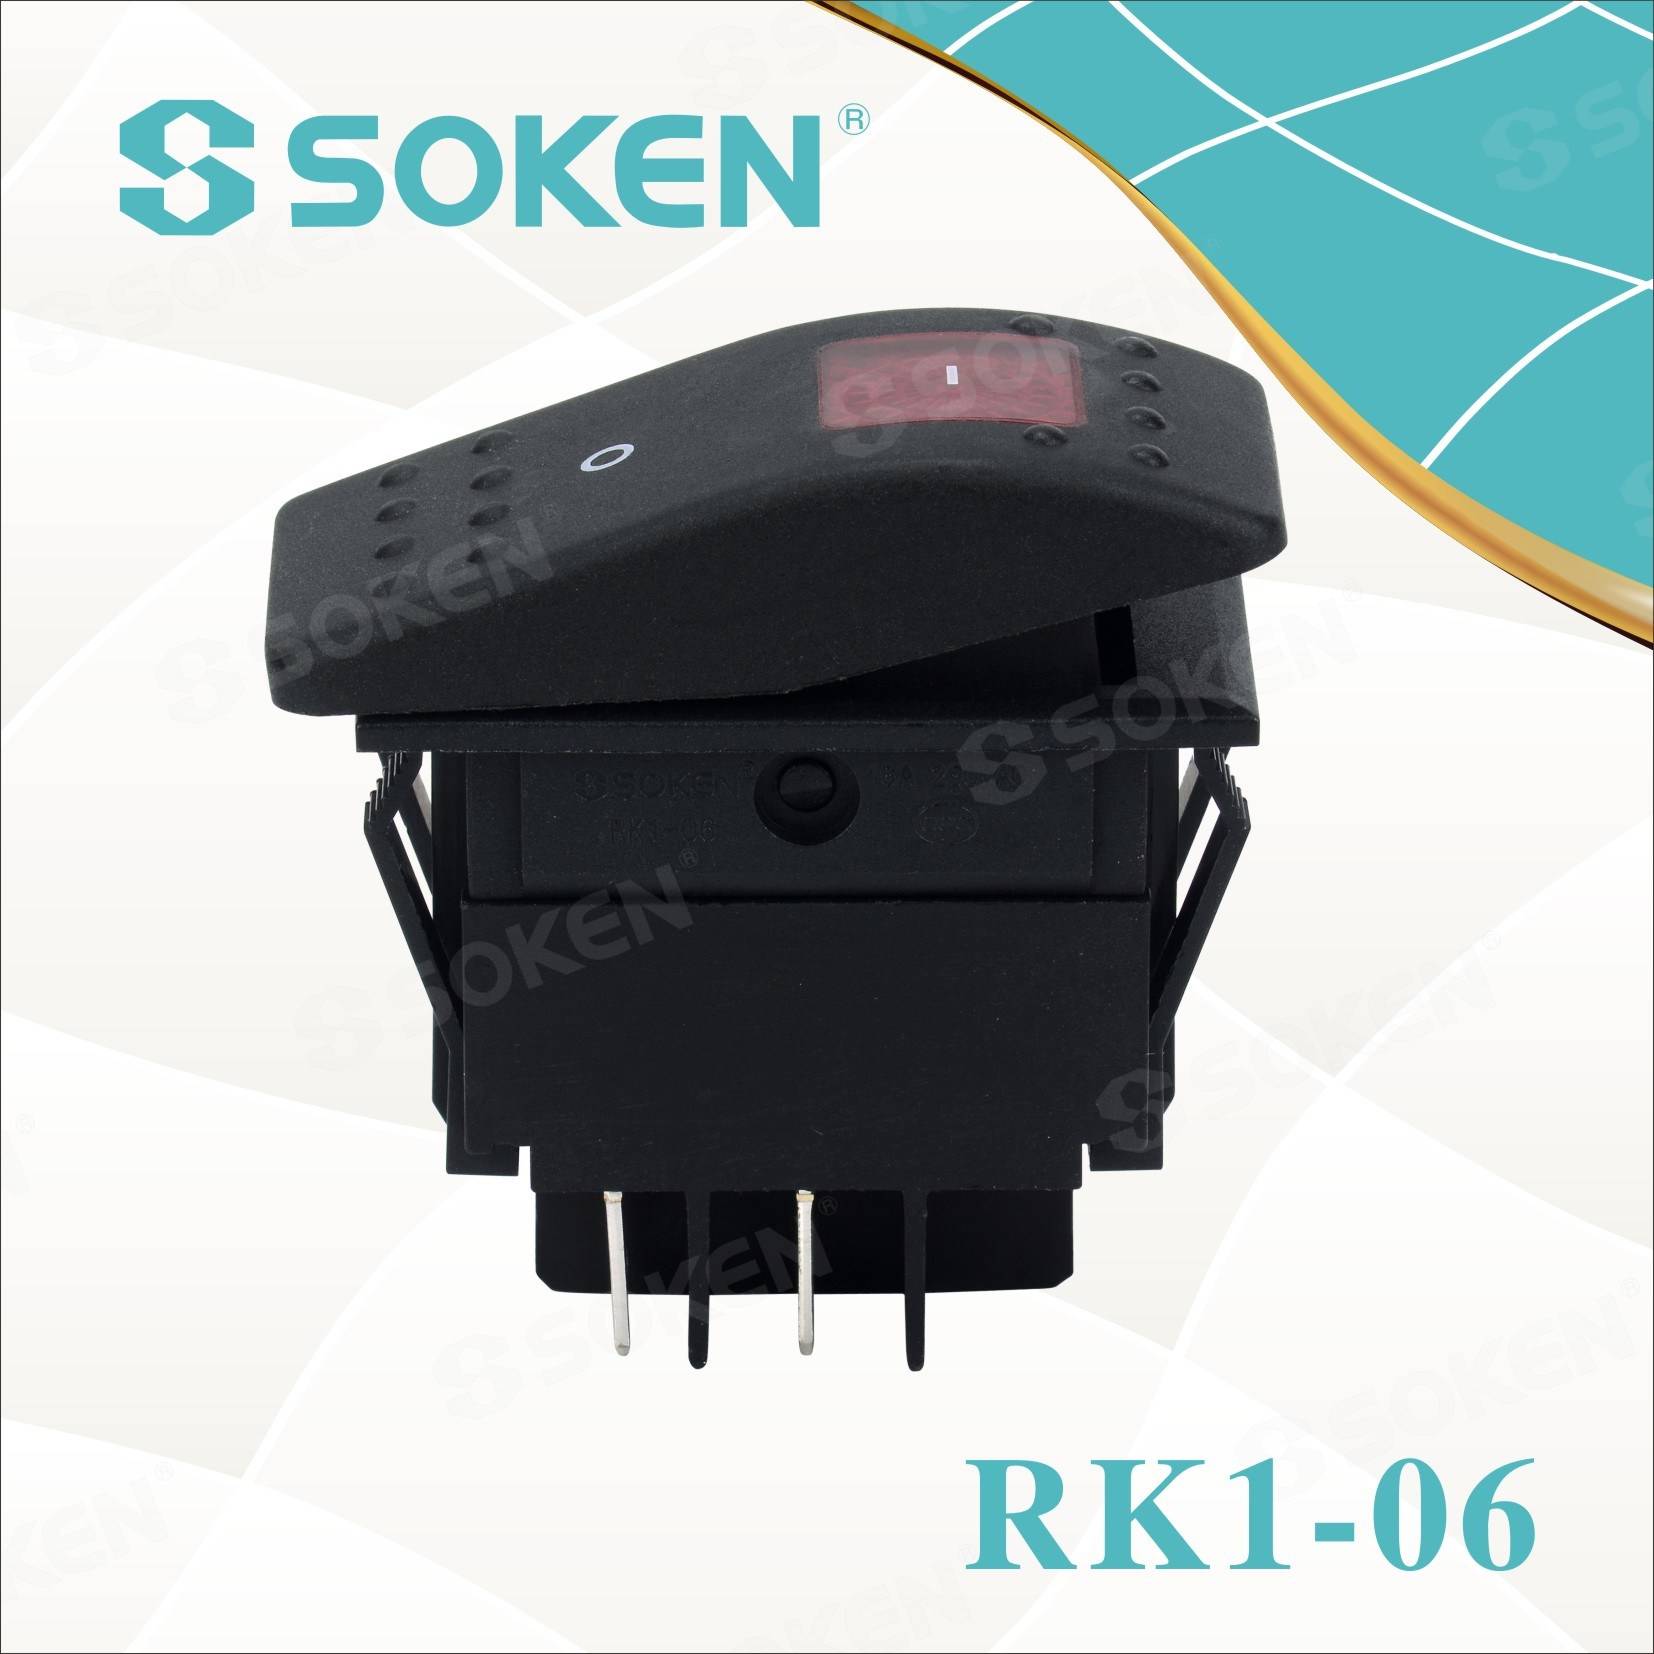 Wholesale Dealers of Keyed Switch -
 Motor Rocker Switch – Master Soken Electrical